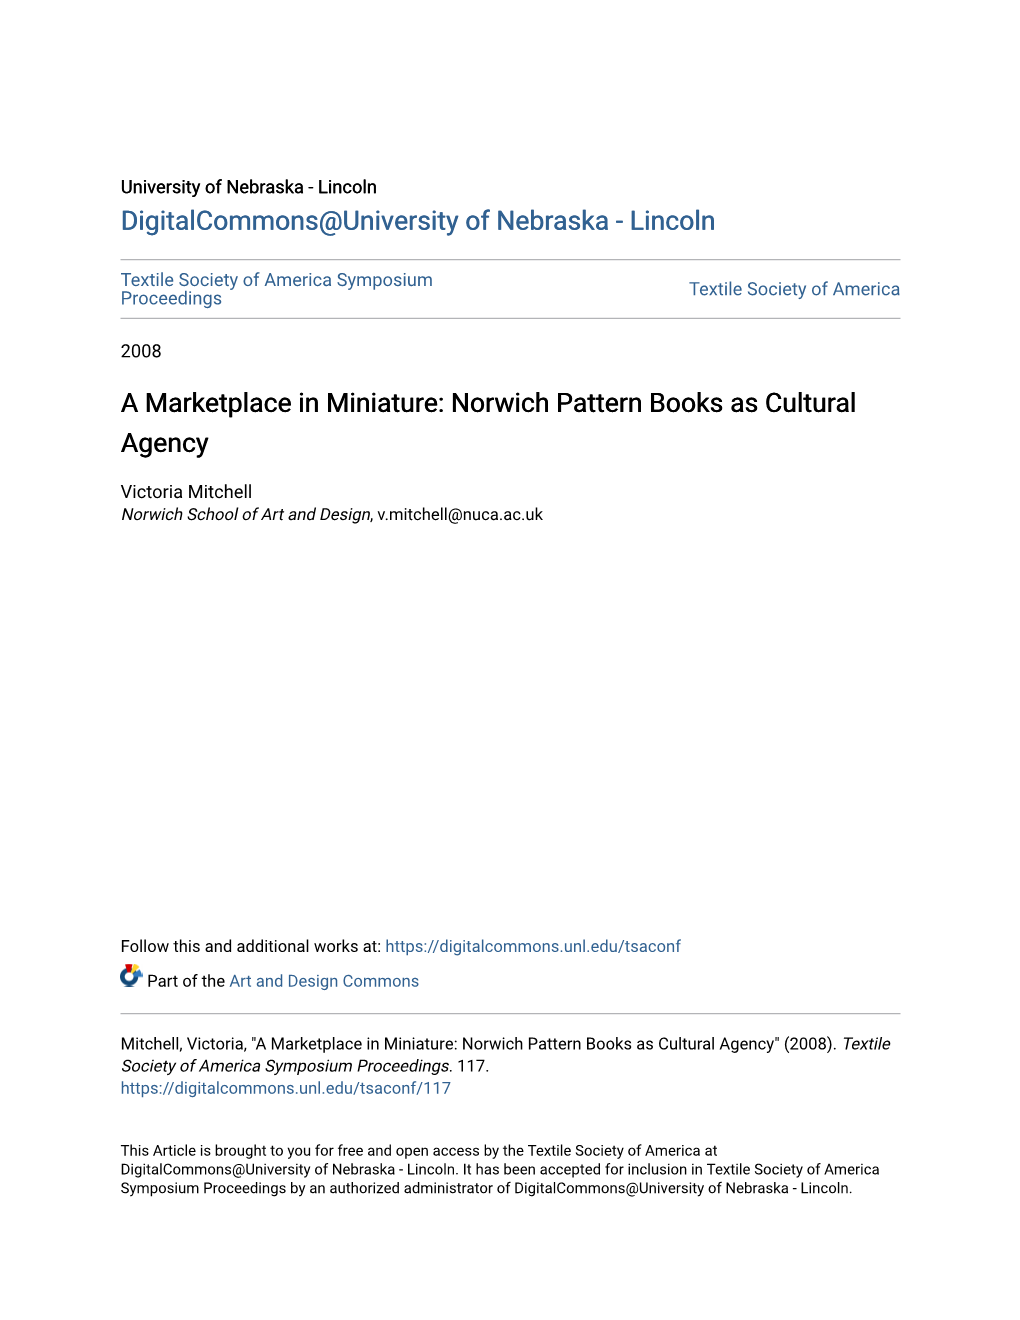 Norwich Pattern Books As Cultural Agency